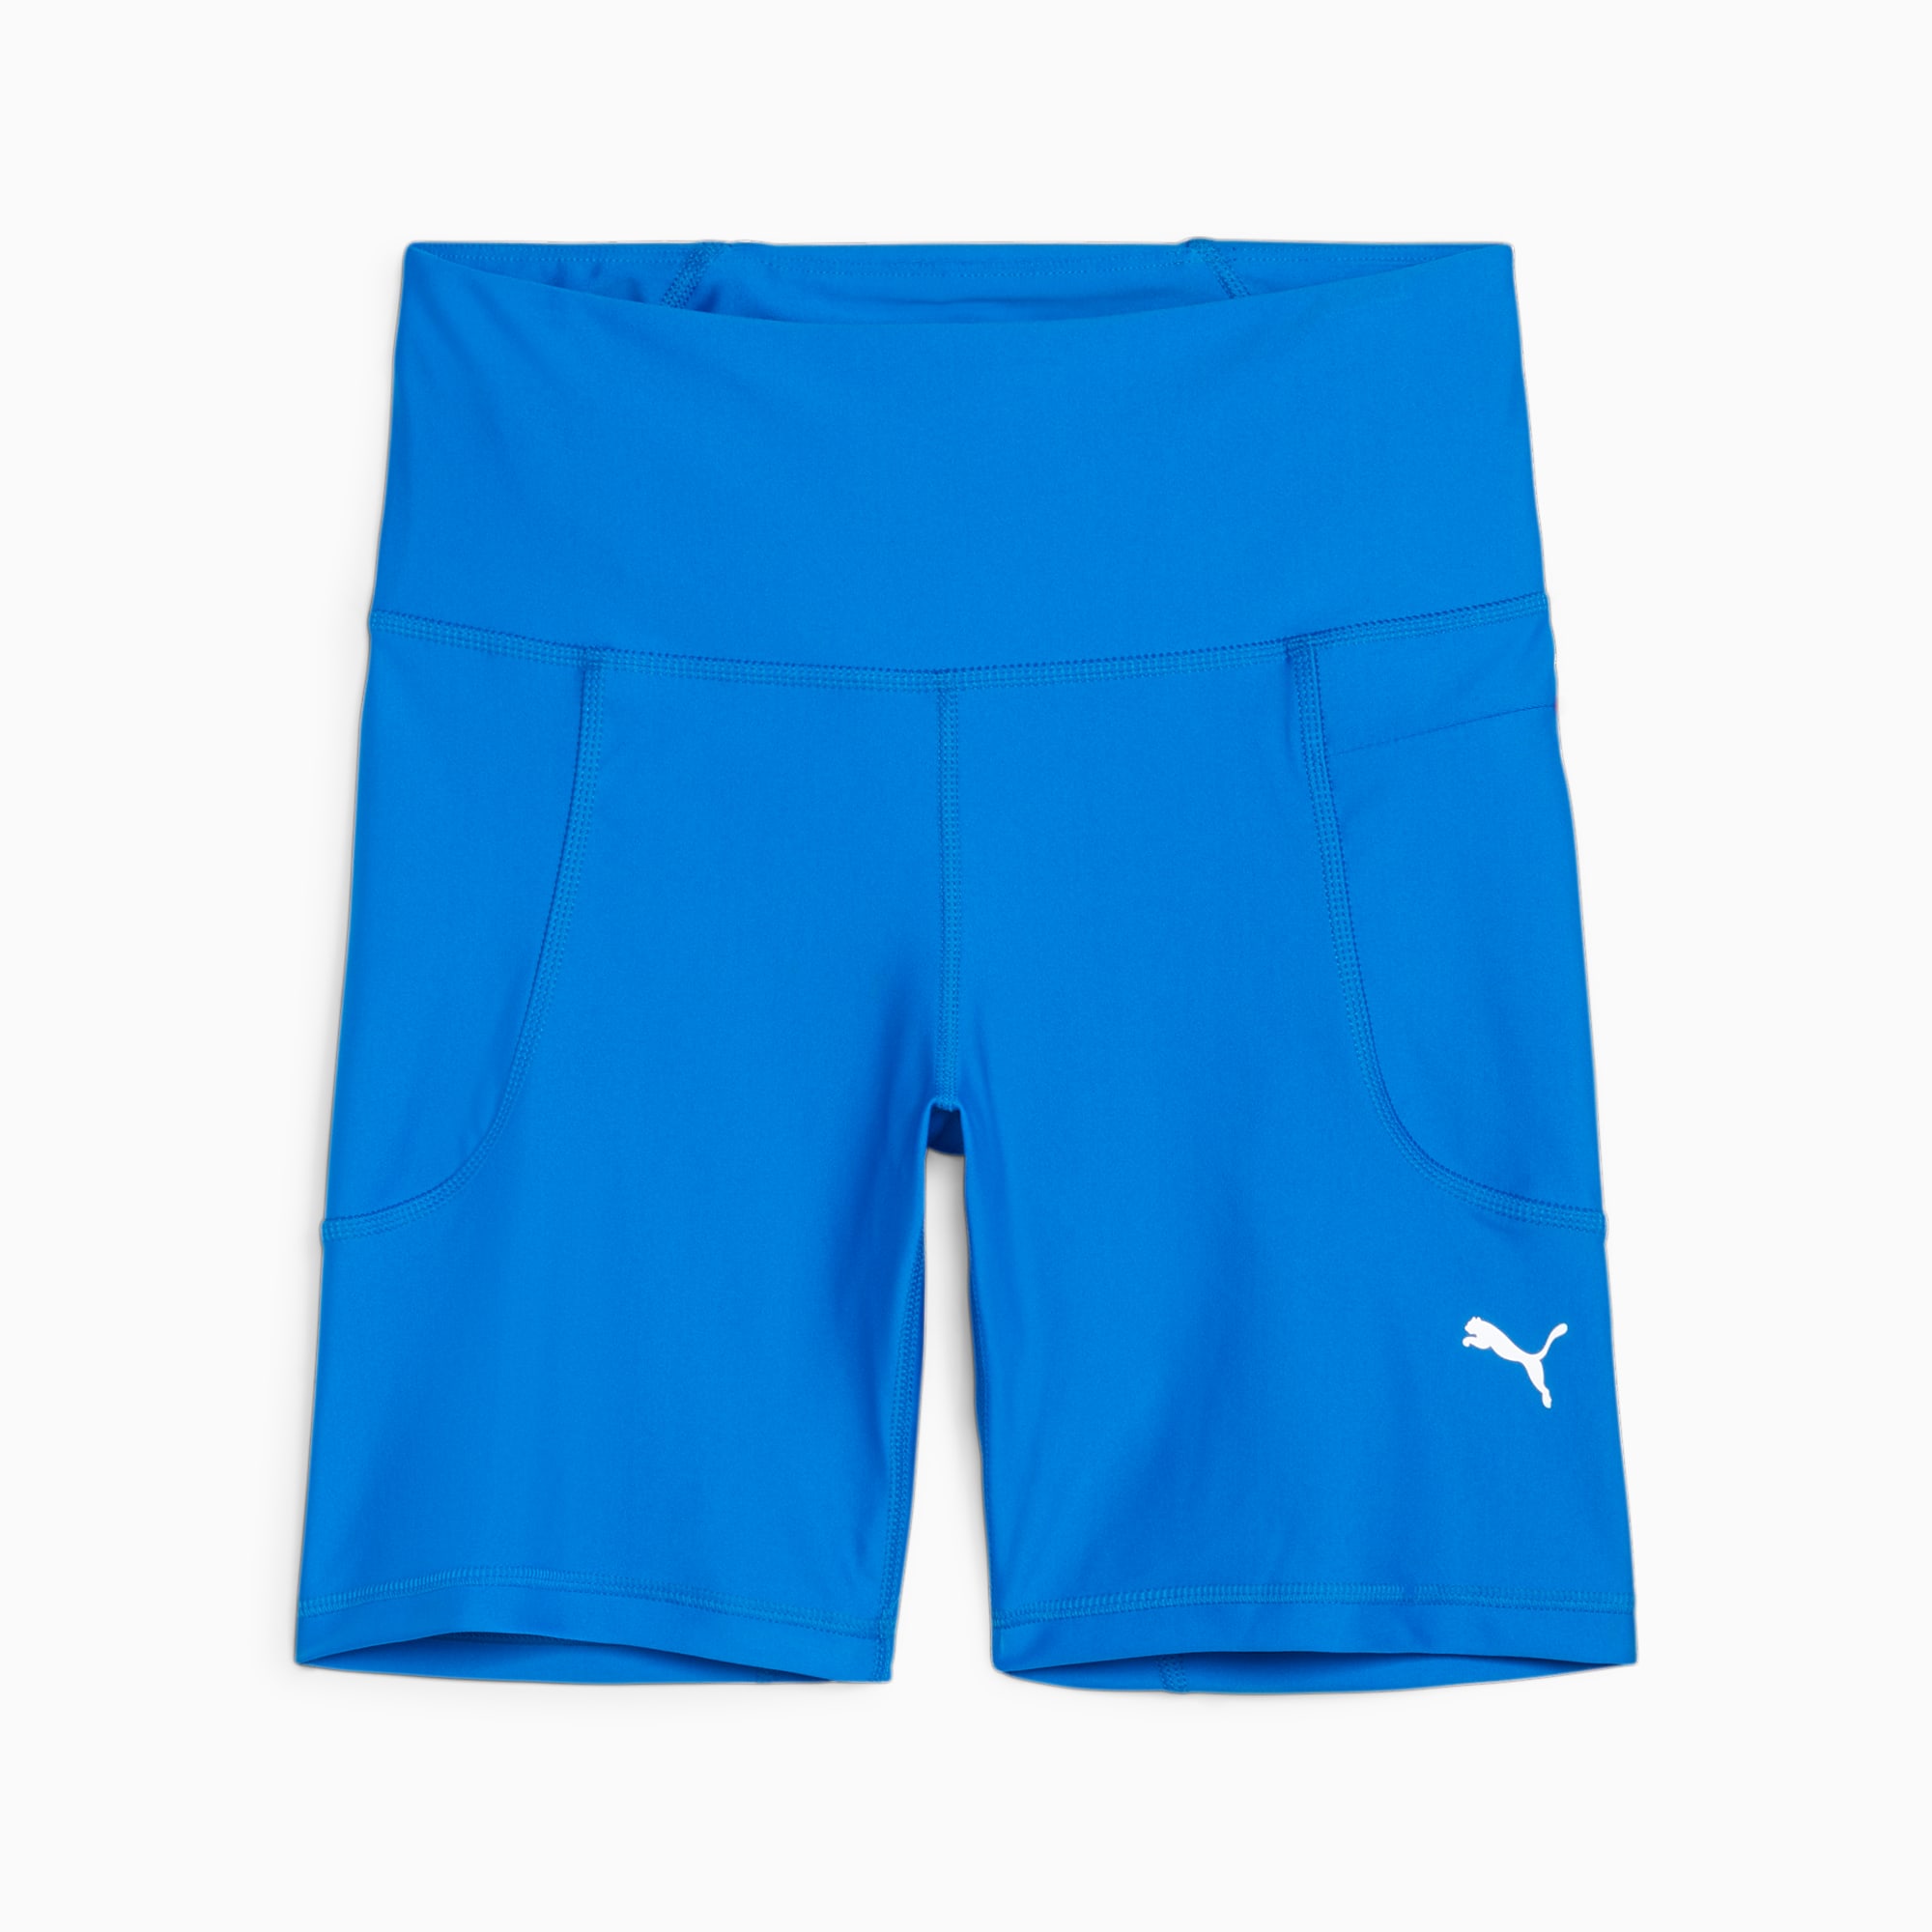 PUMA Infuse high rise legging shorts in petrol blue